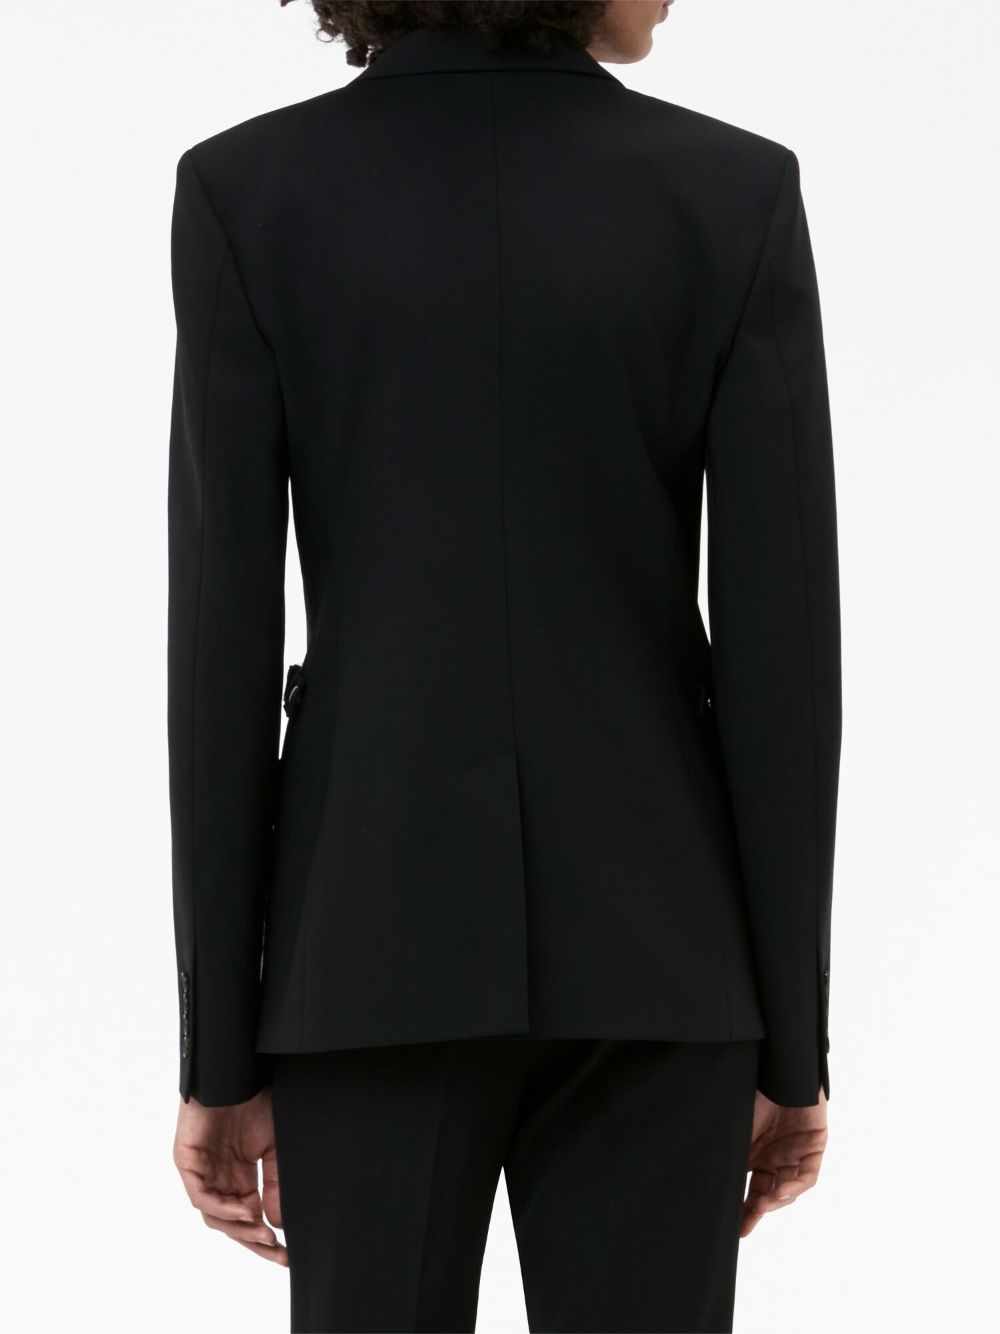 Classy Black Coat for Ladies - FW23 Season